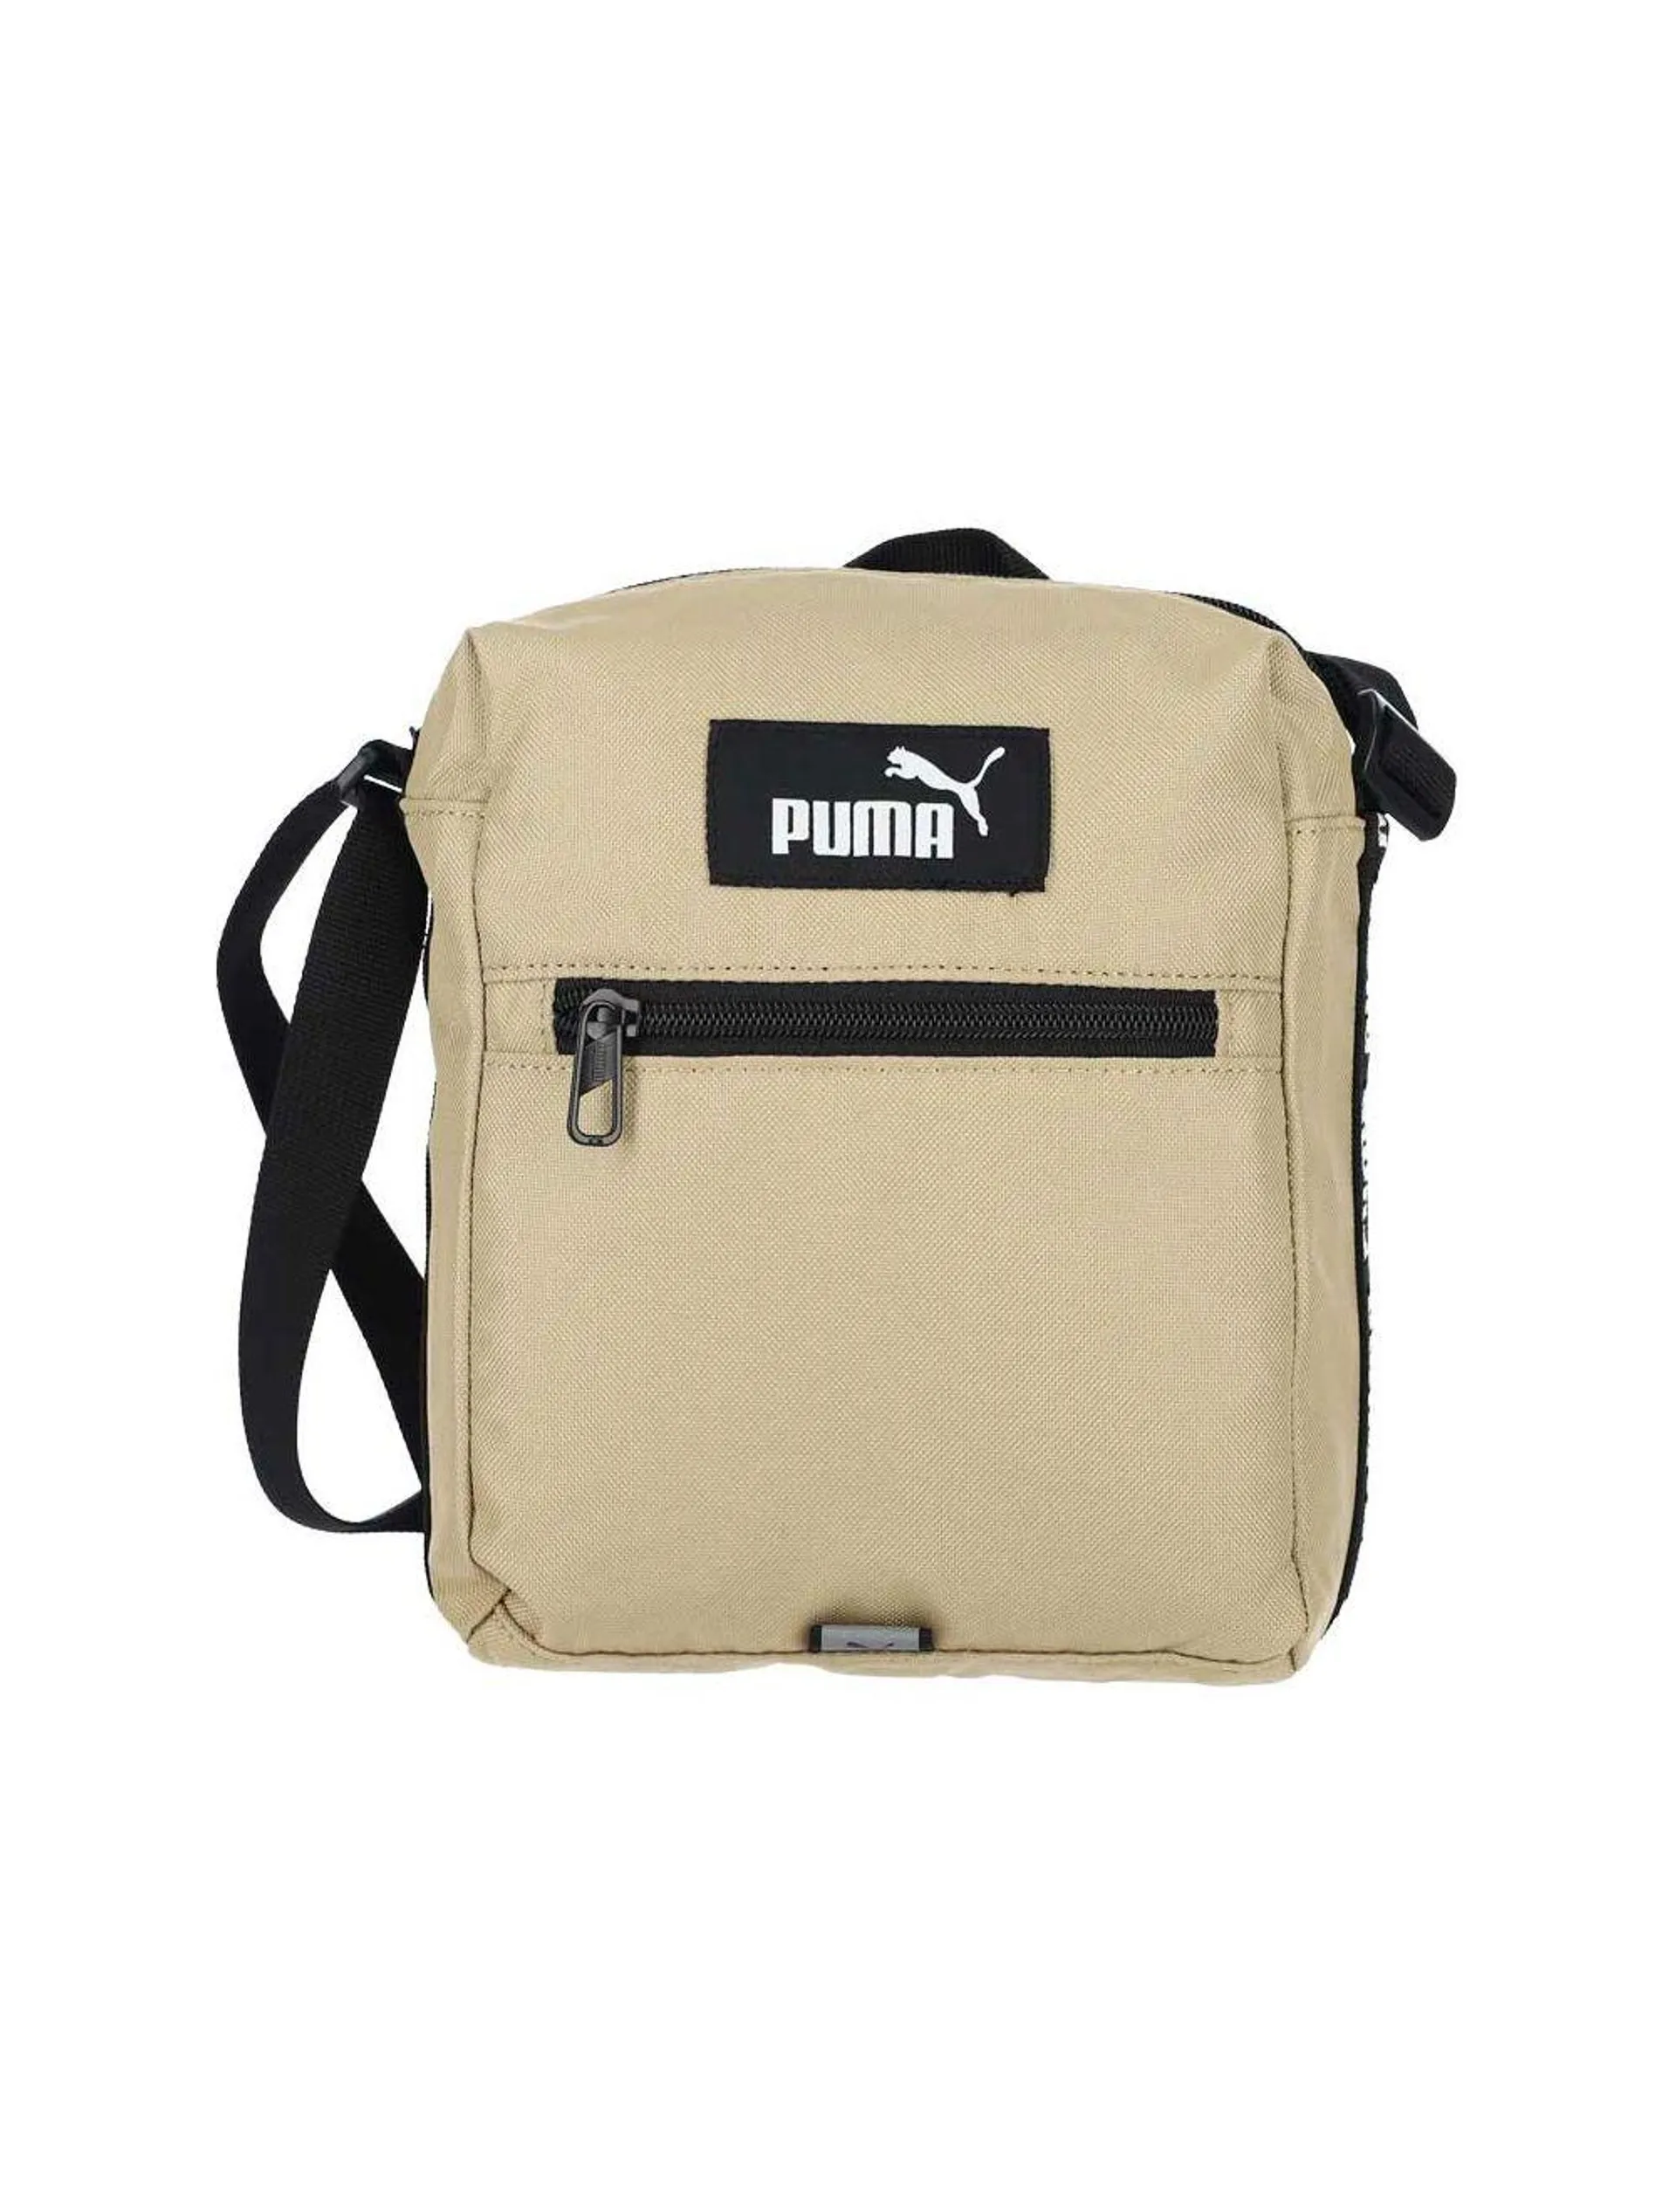 Puma Evoess Portable Bag Tan